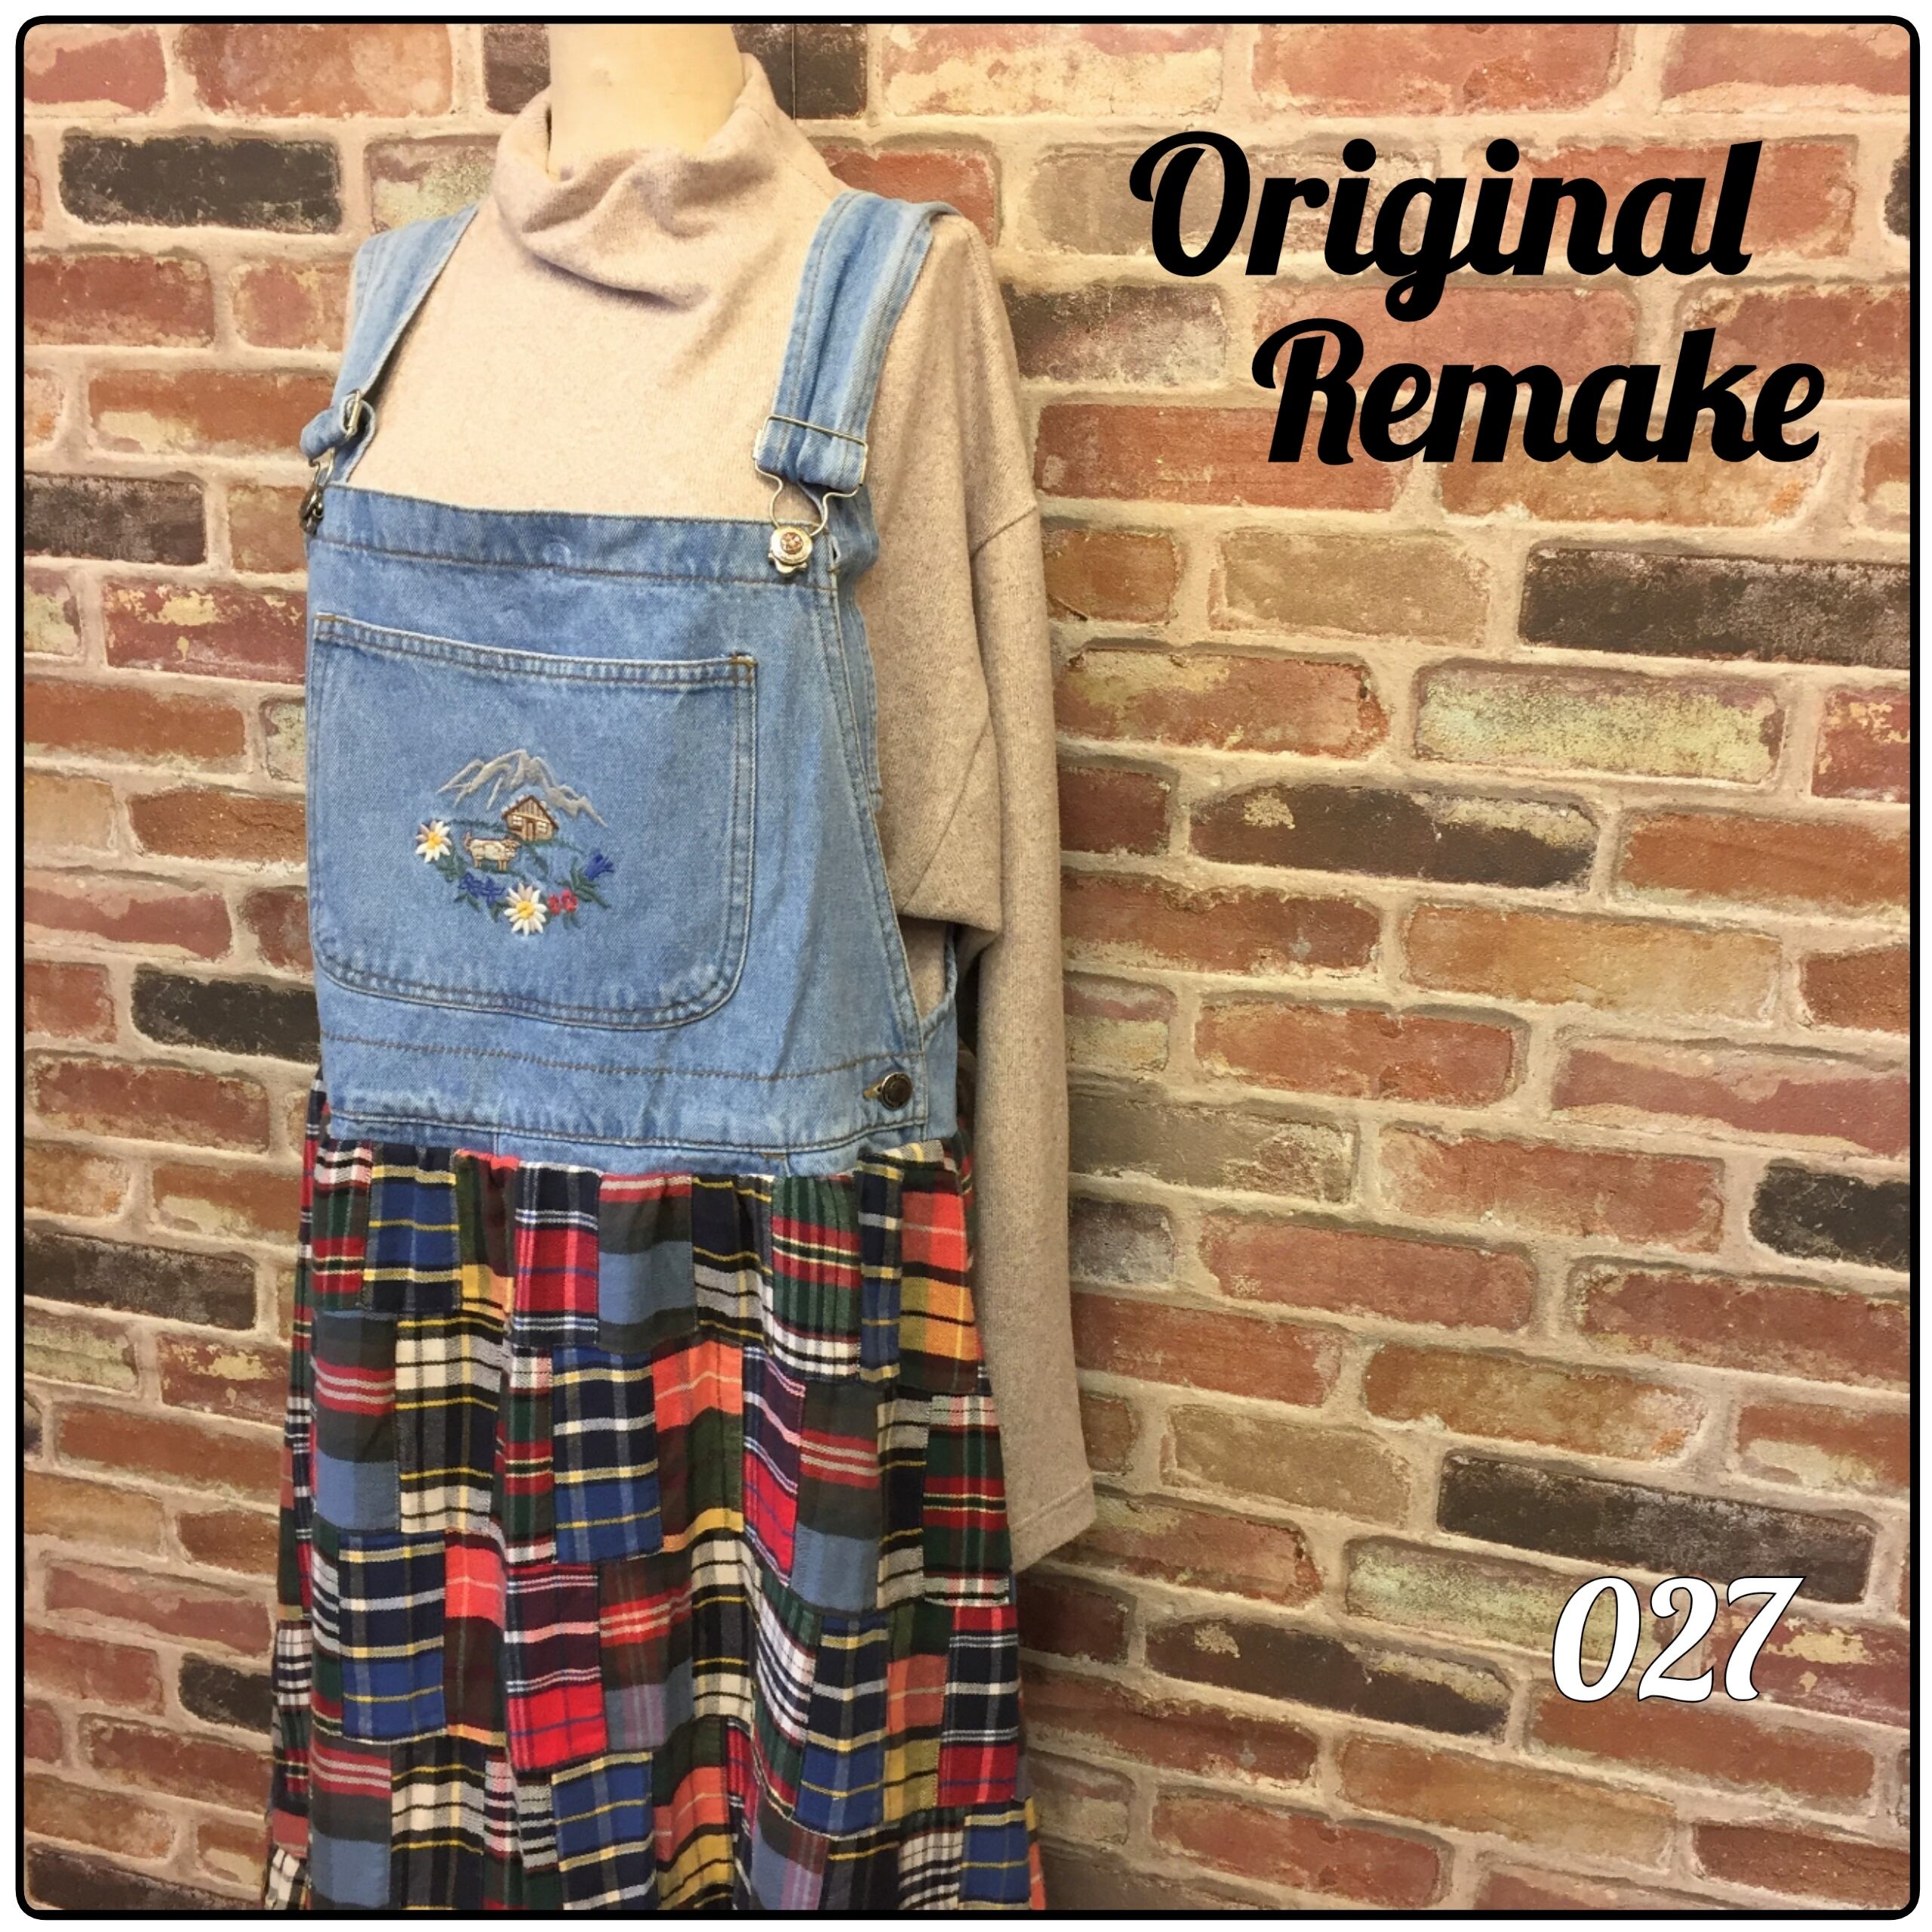 Original Remake Jumper Skirt